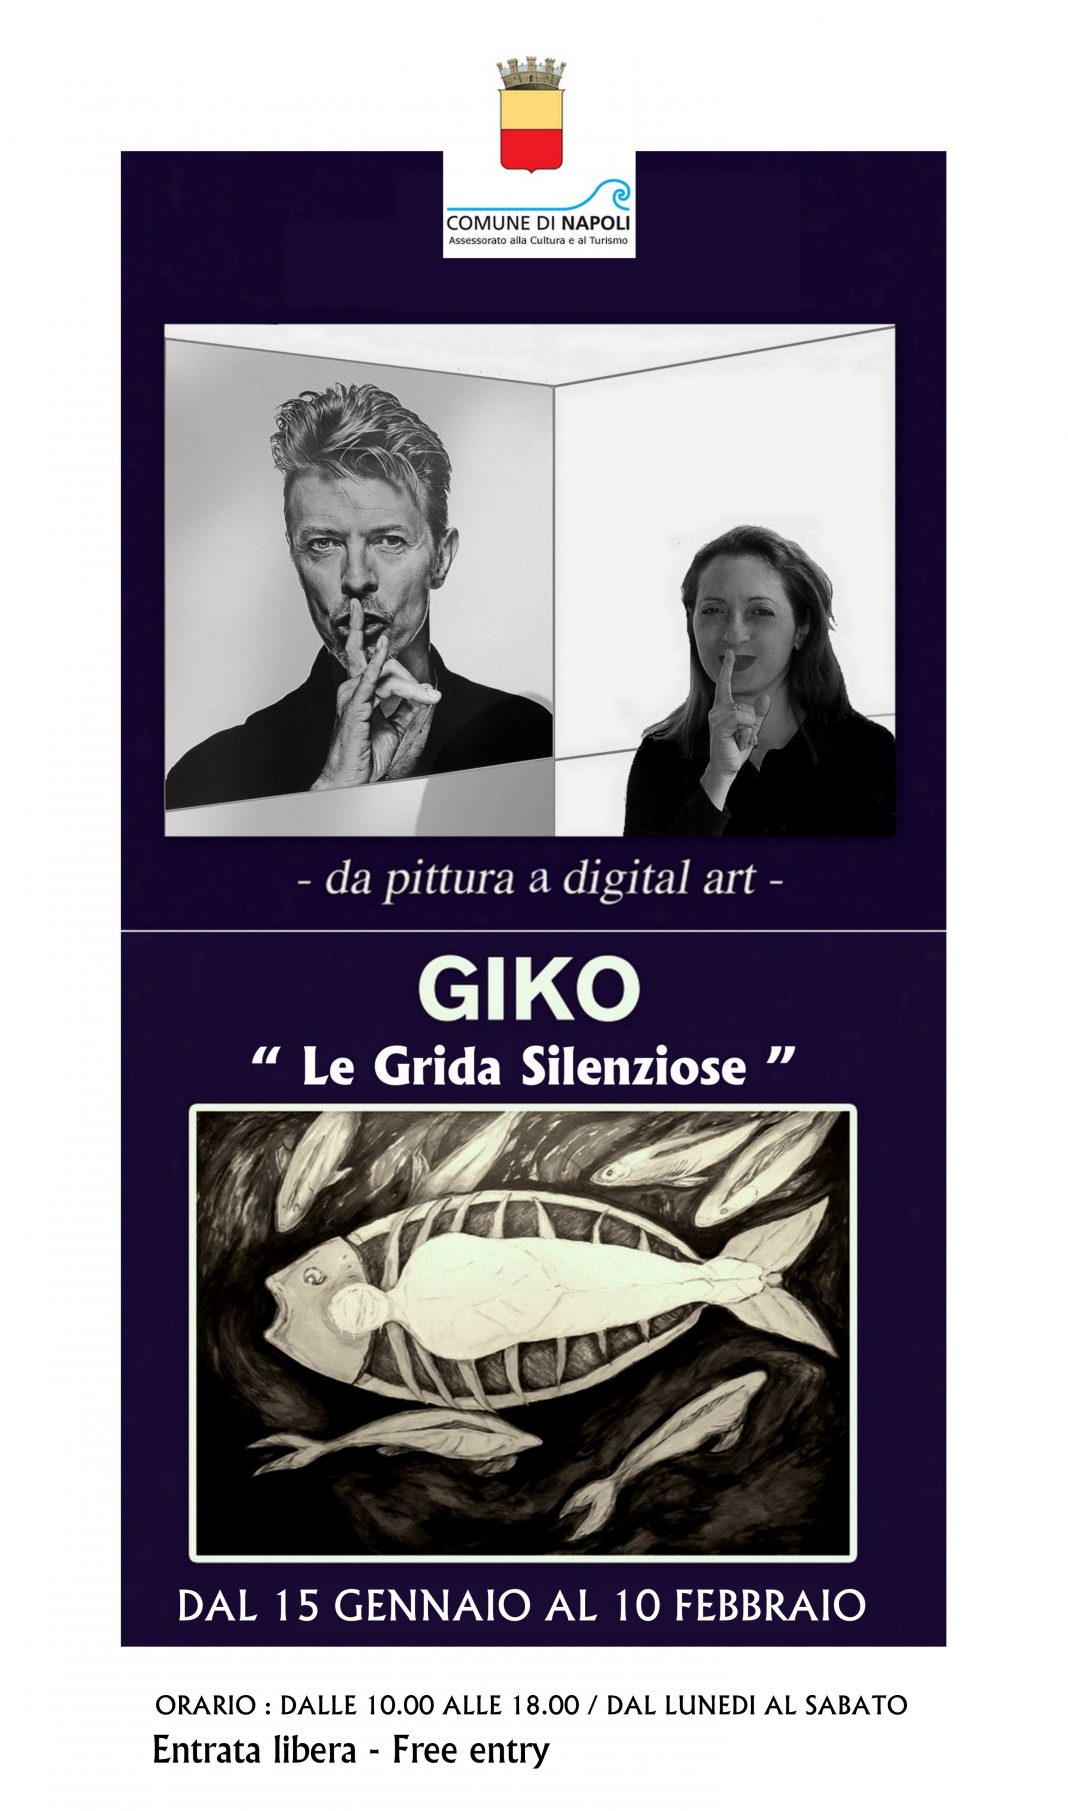 Giko – Le Grida Silenziosehttps://www.exibart.com/repository/media/formidable/11/Napoli-manifesto-1068x1811.jpg